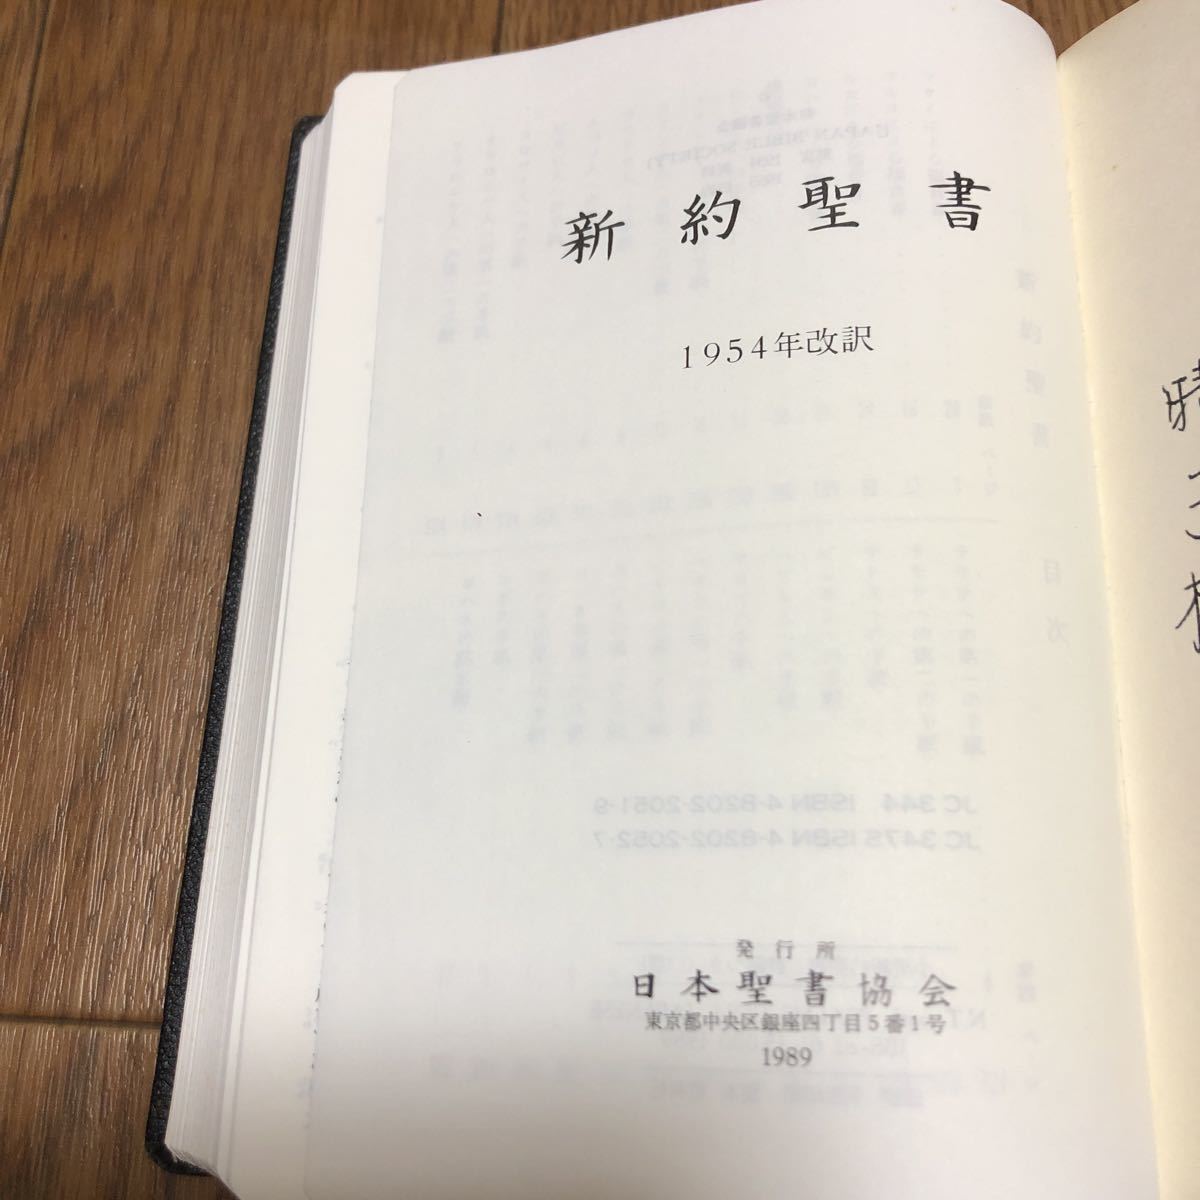 JCO59S 口語訳大型引照つき聖書・折革装 | horsemoveis.com.br